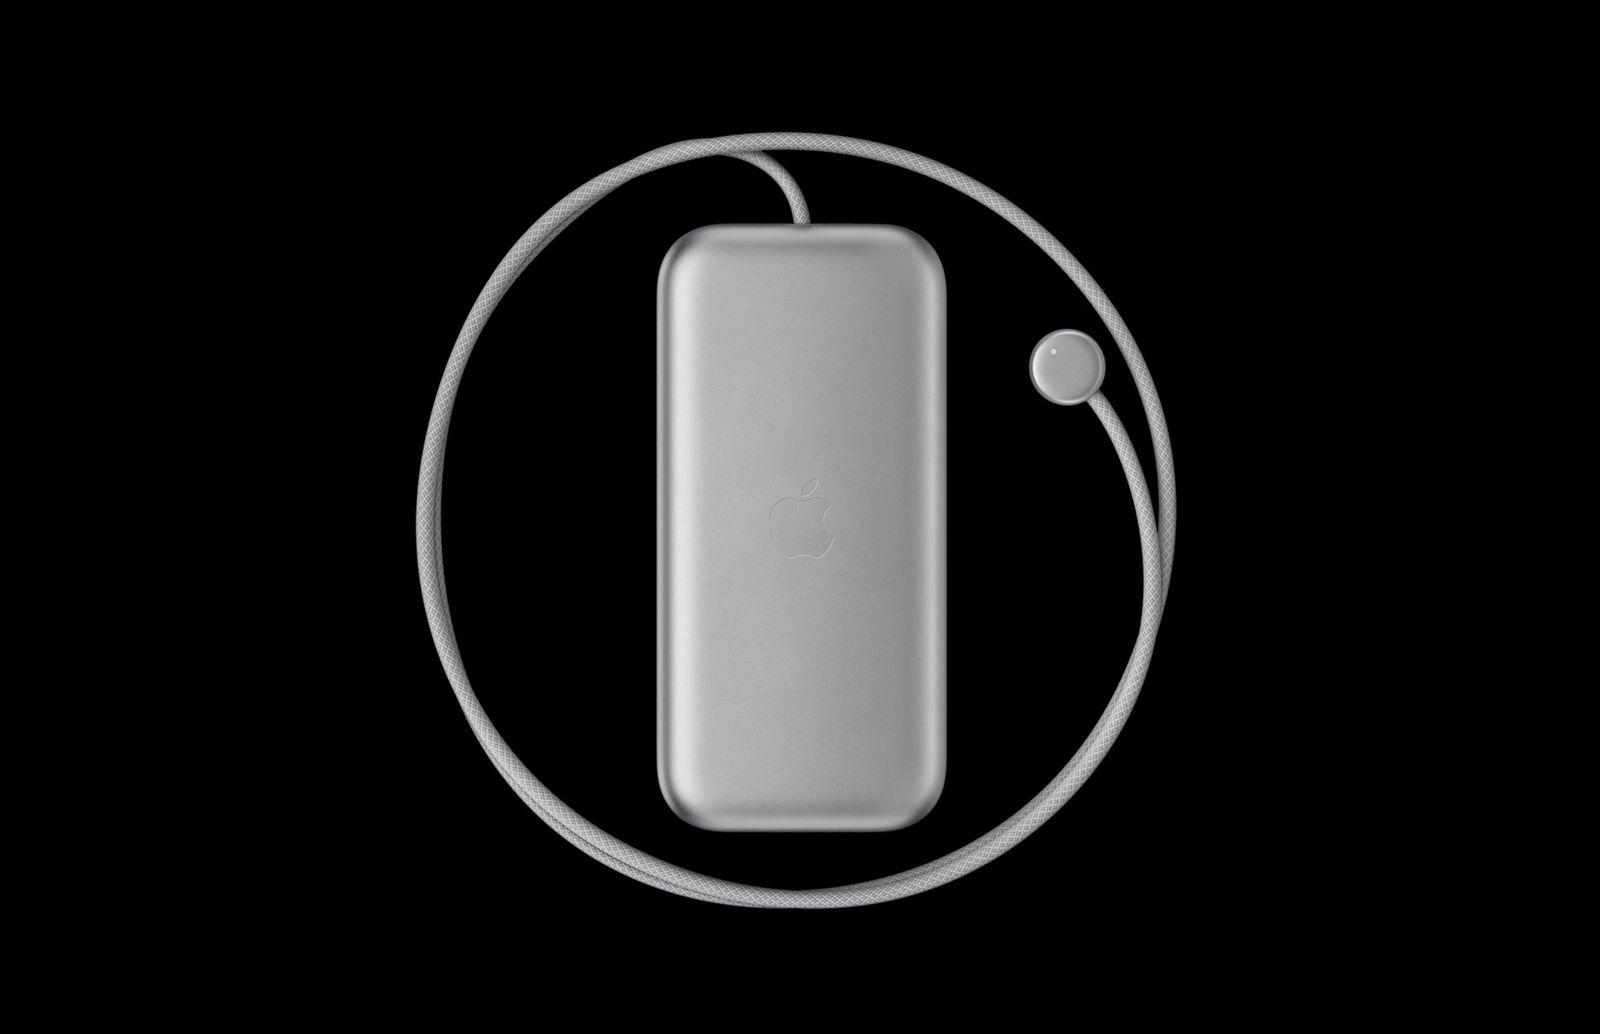 Кабель питания аккумуляторной батареи Apple Vision Pro является съемным